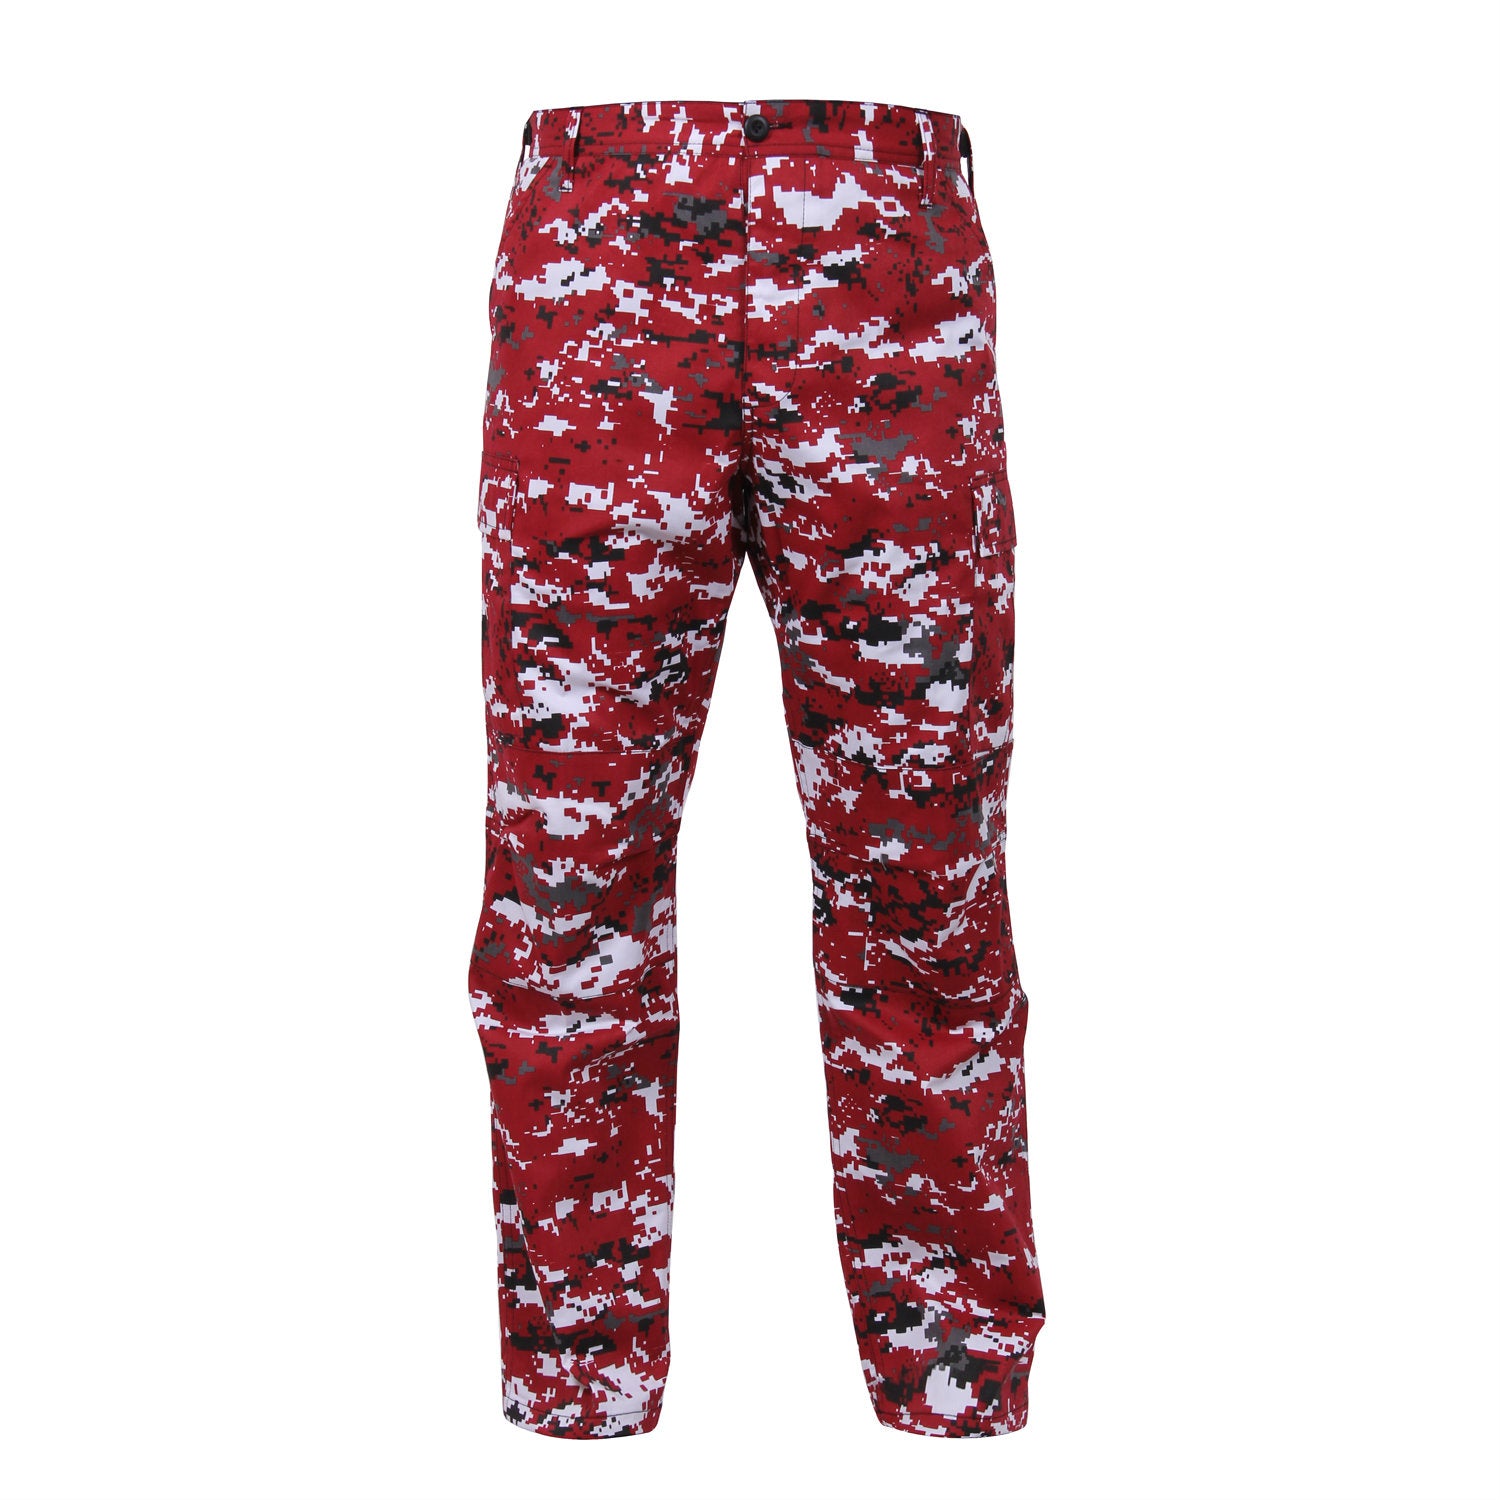 BDU Pants | Tactical Pants For Men | Red Digital Camouflage